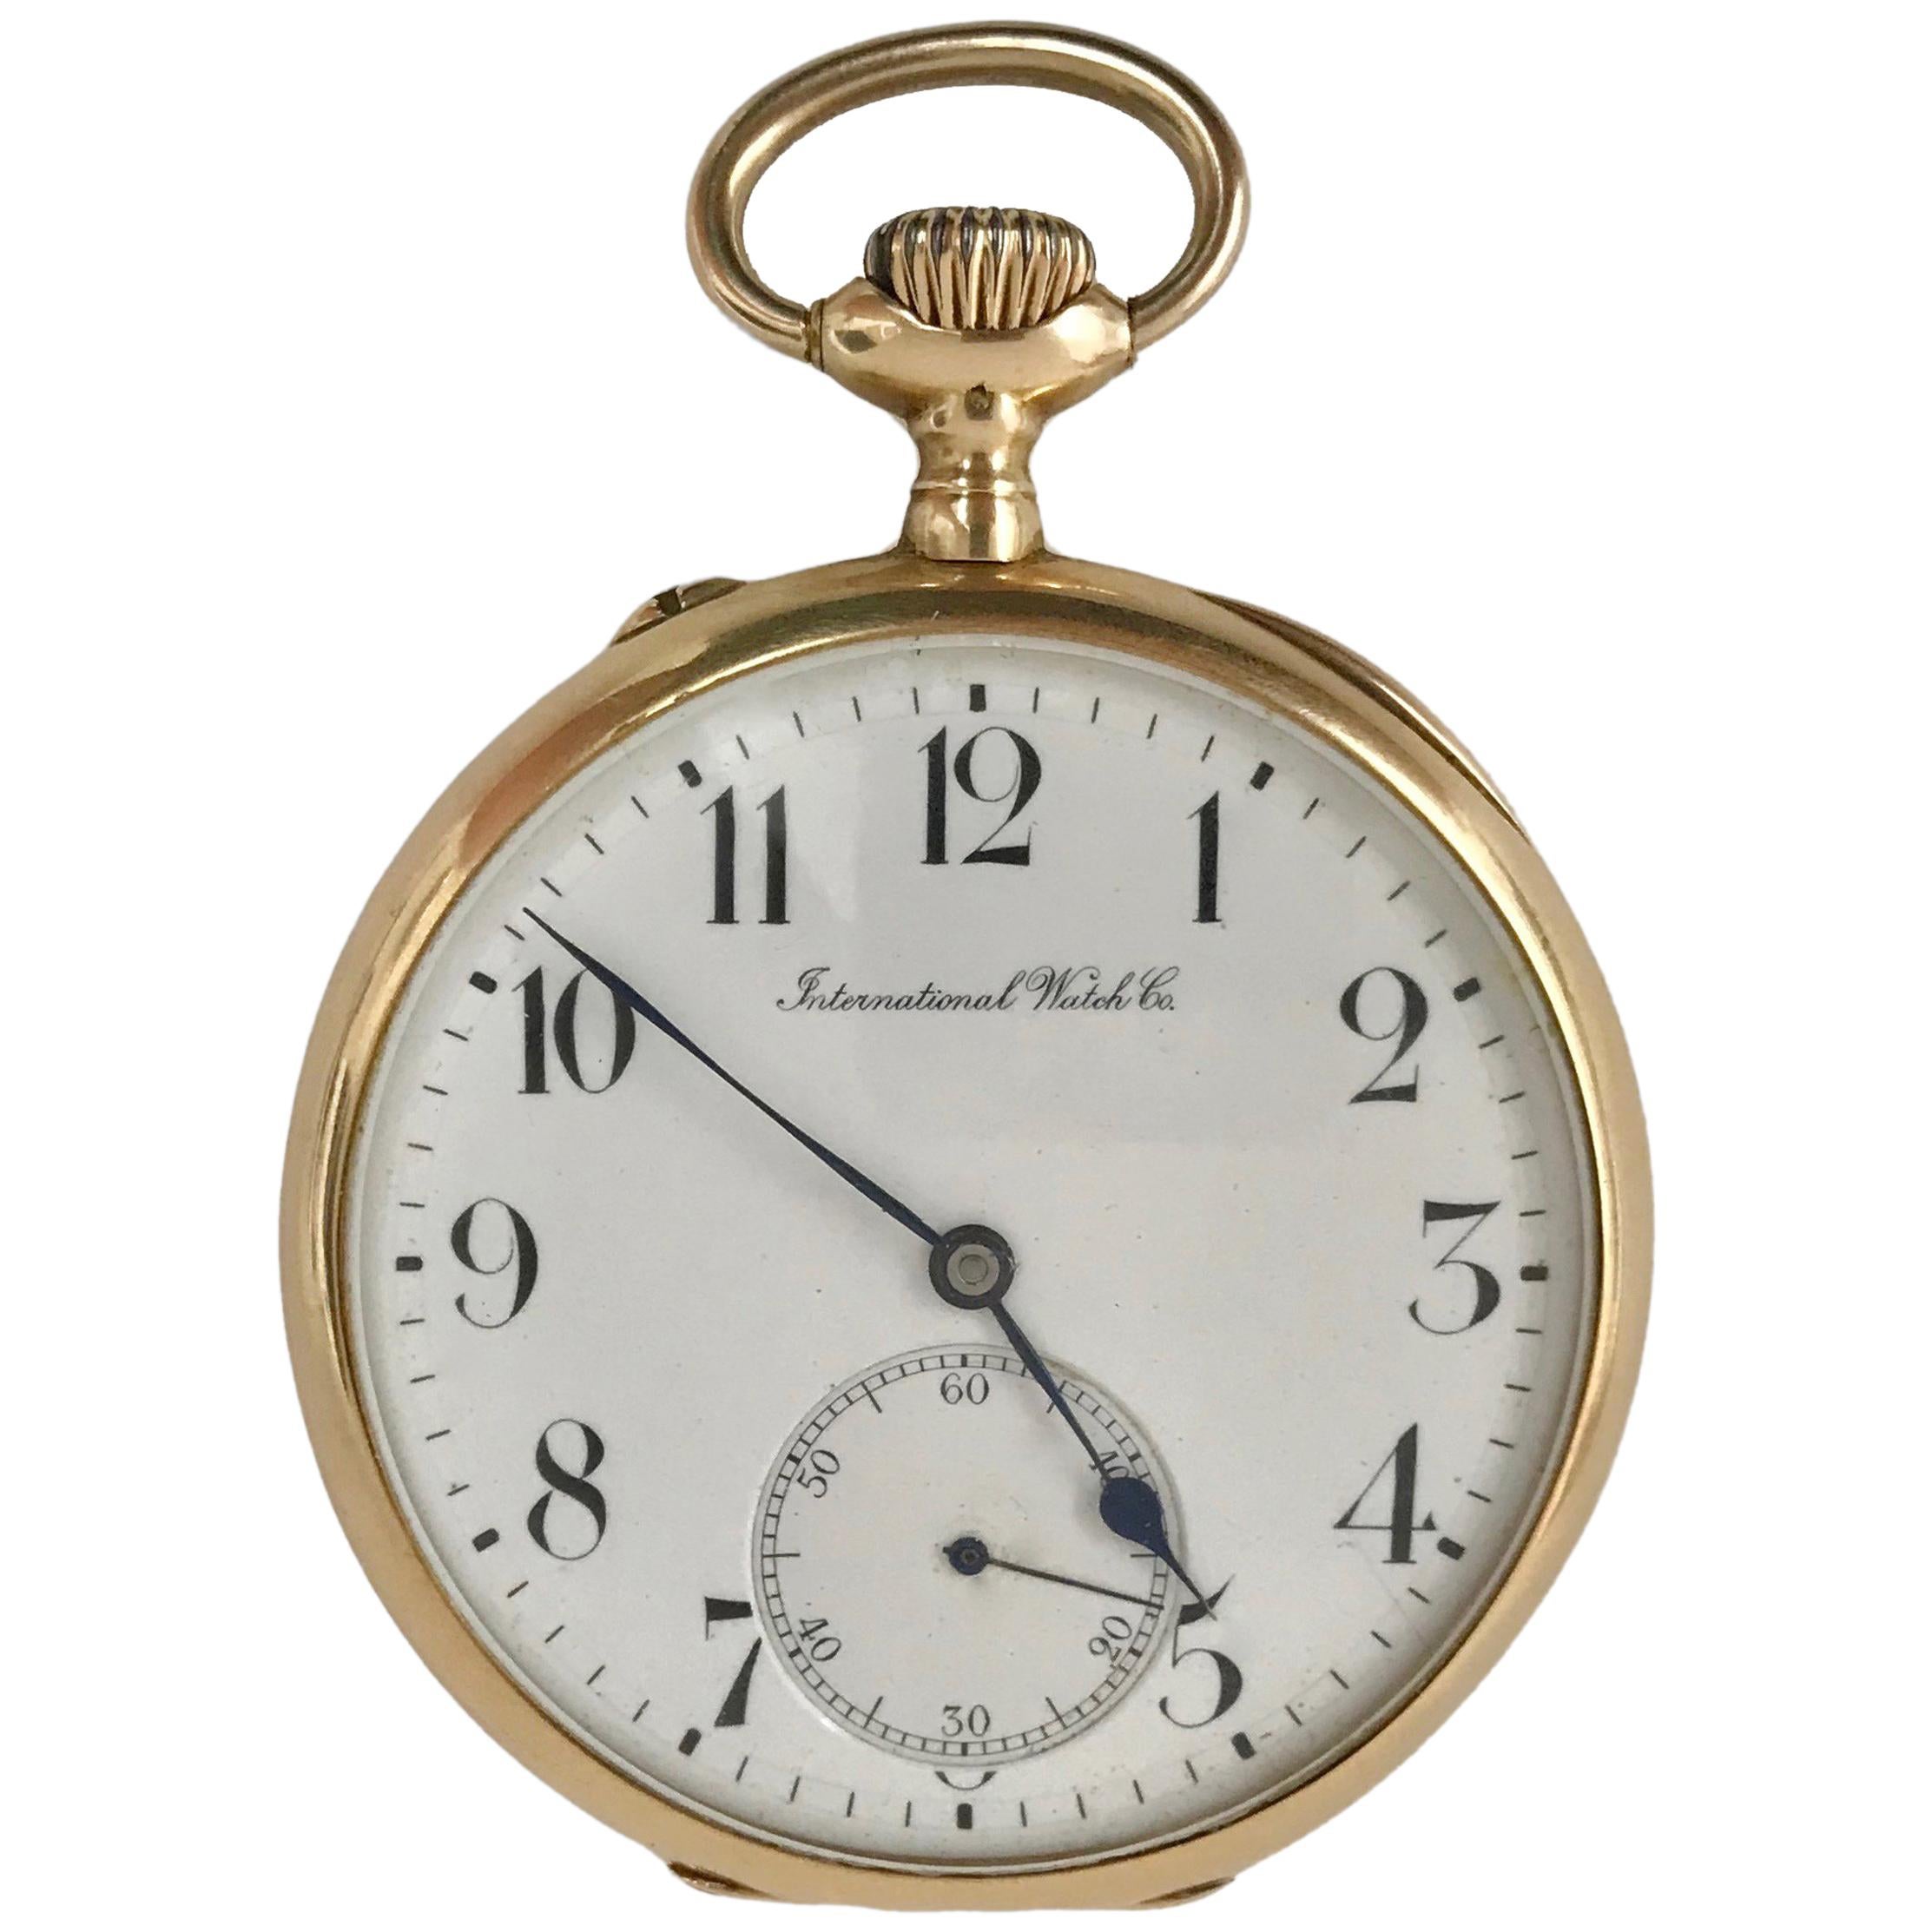  IWC International Watch & Co pocket watch in 18 karat gold. 1910s Swiss Made